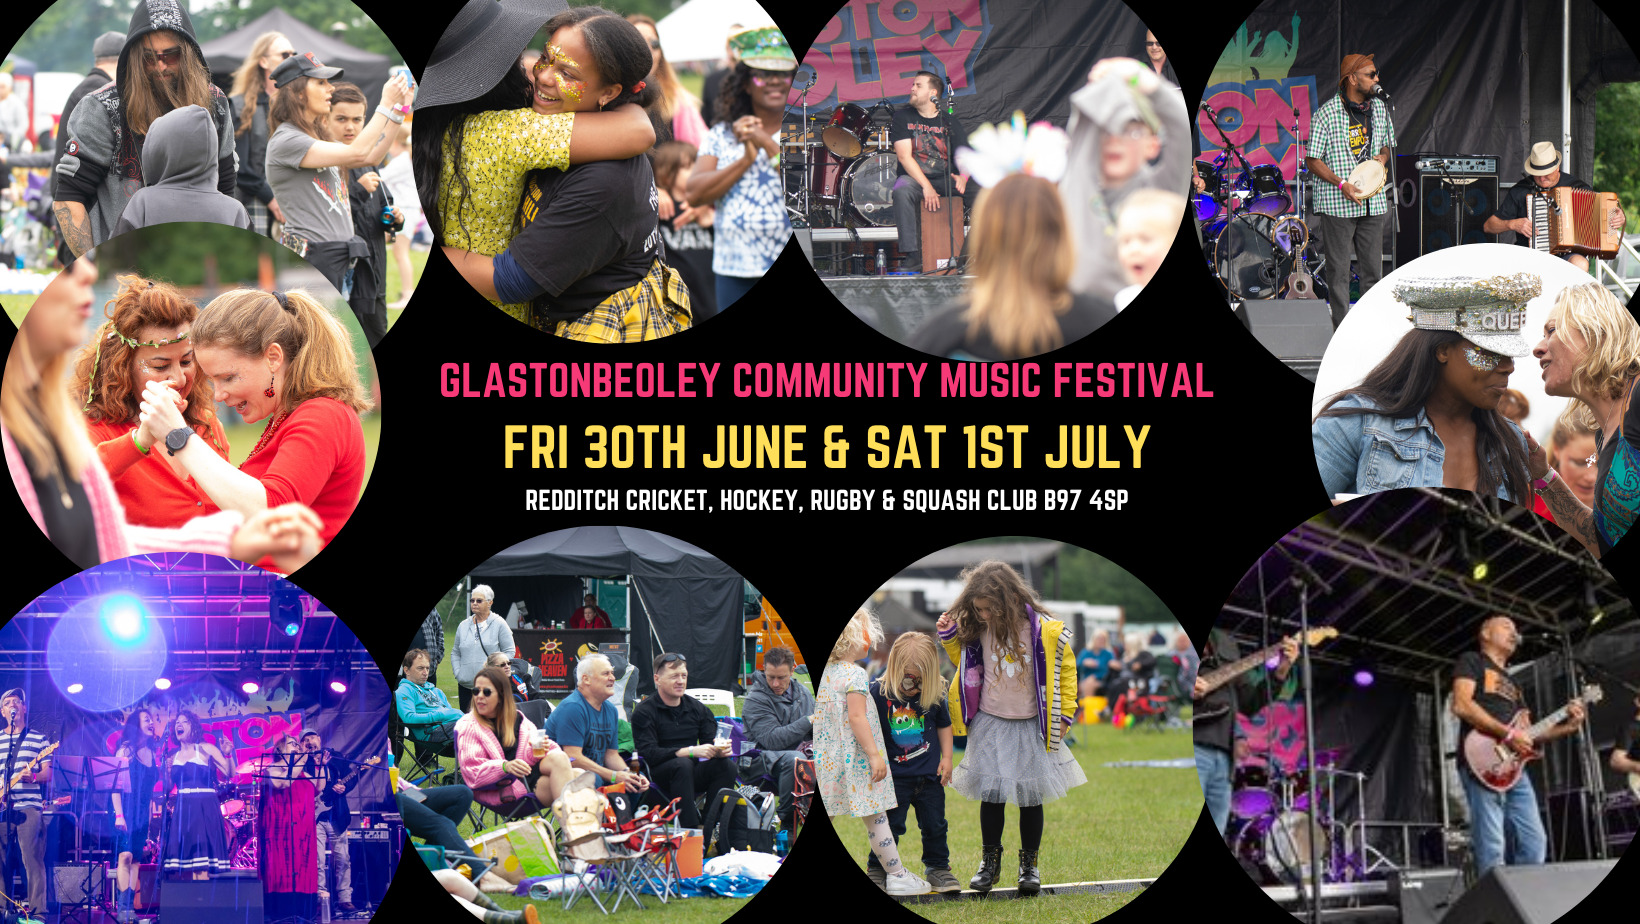 GlastonBeoley Charity Music Festival